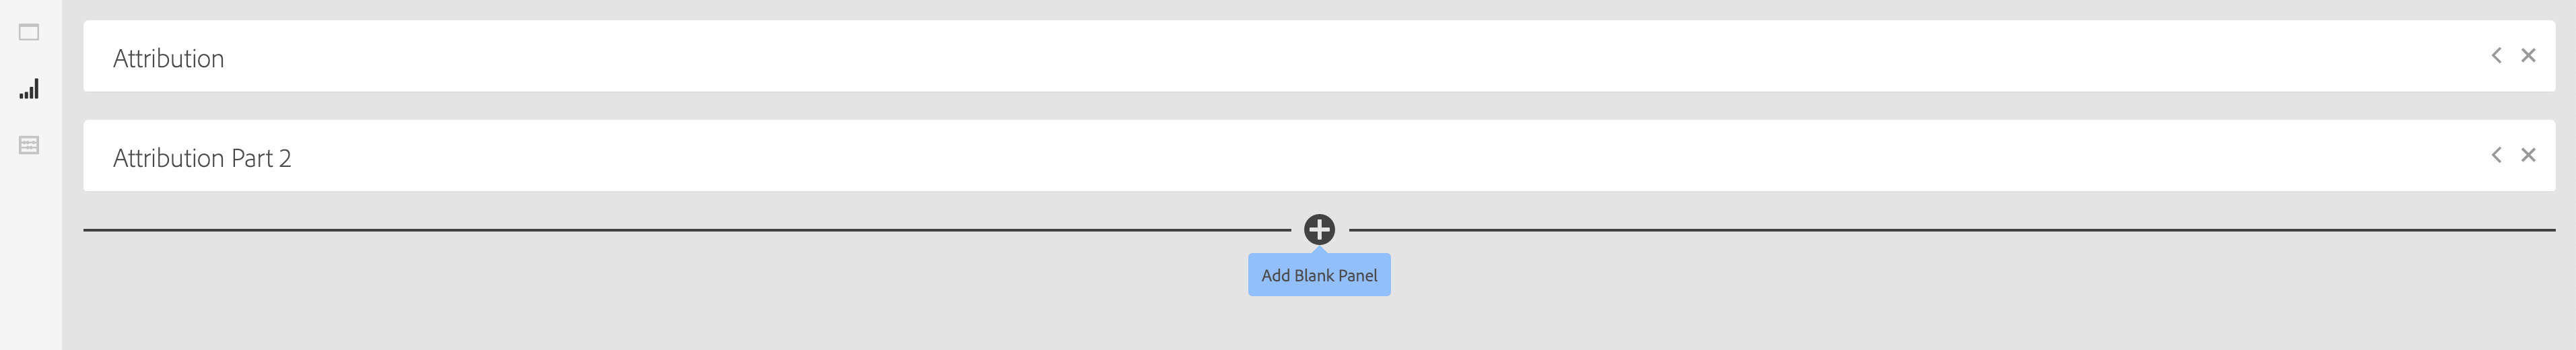 Figure 35: Add Blank Panel button